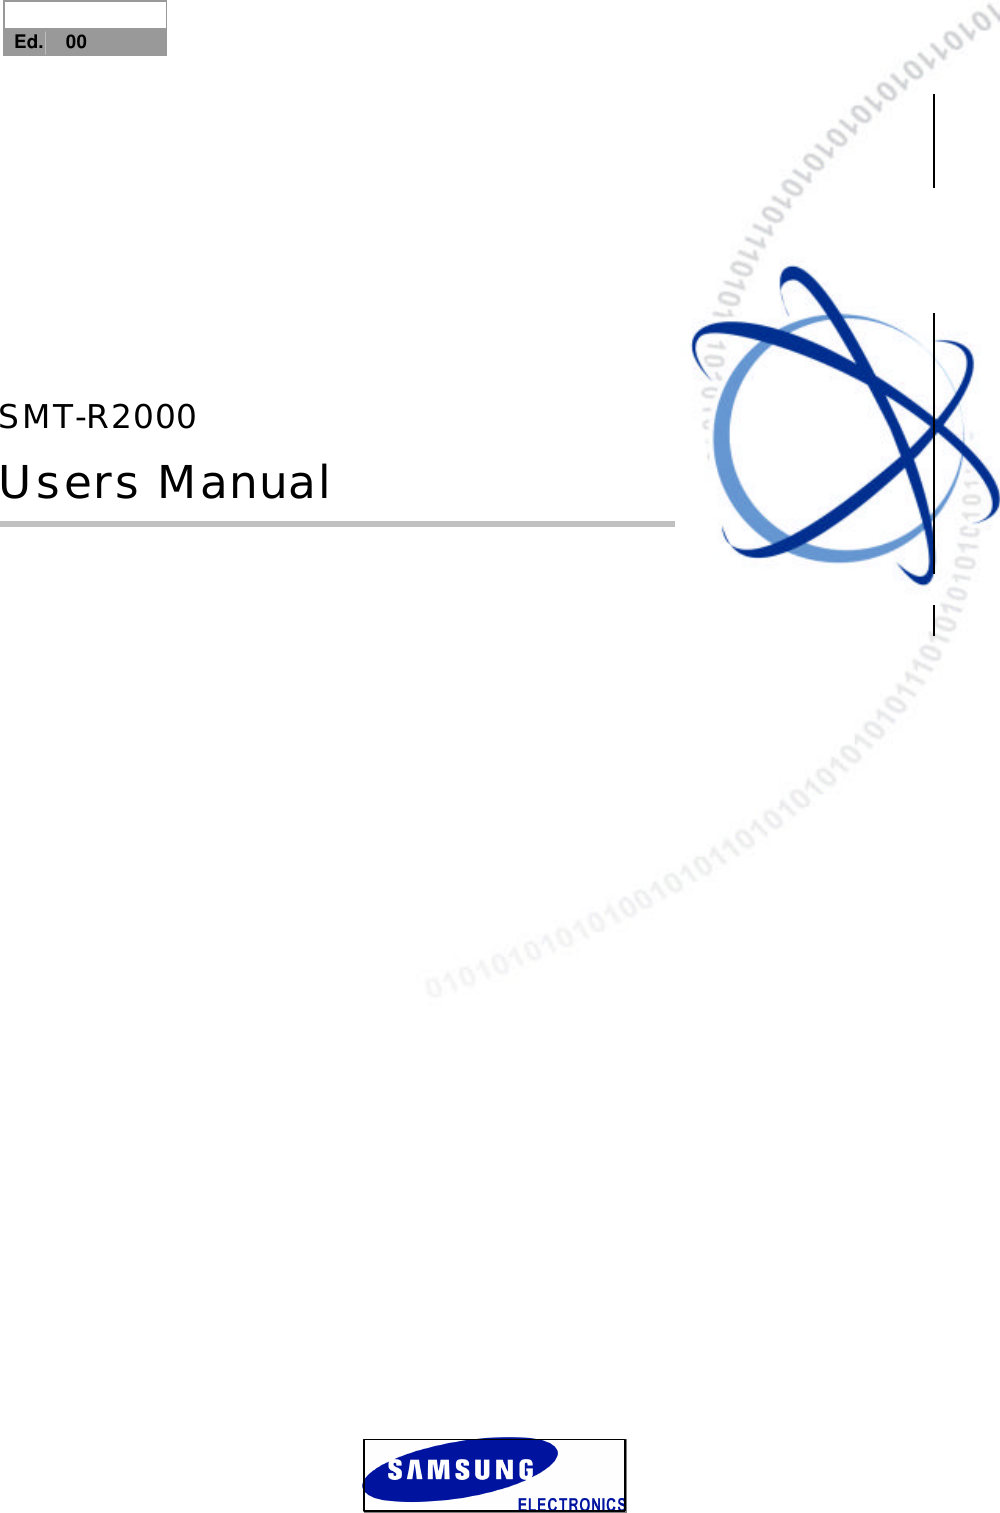  Ed. 00           SMT-R2000 Users Manual    